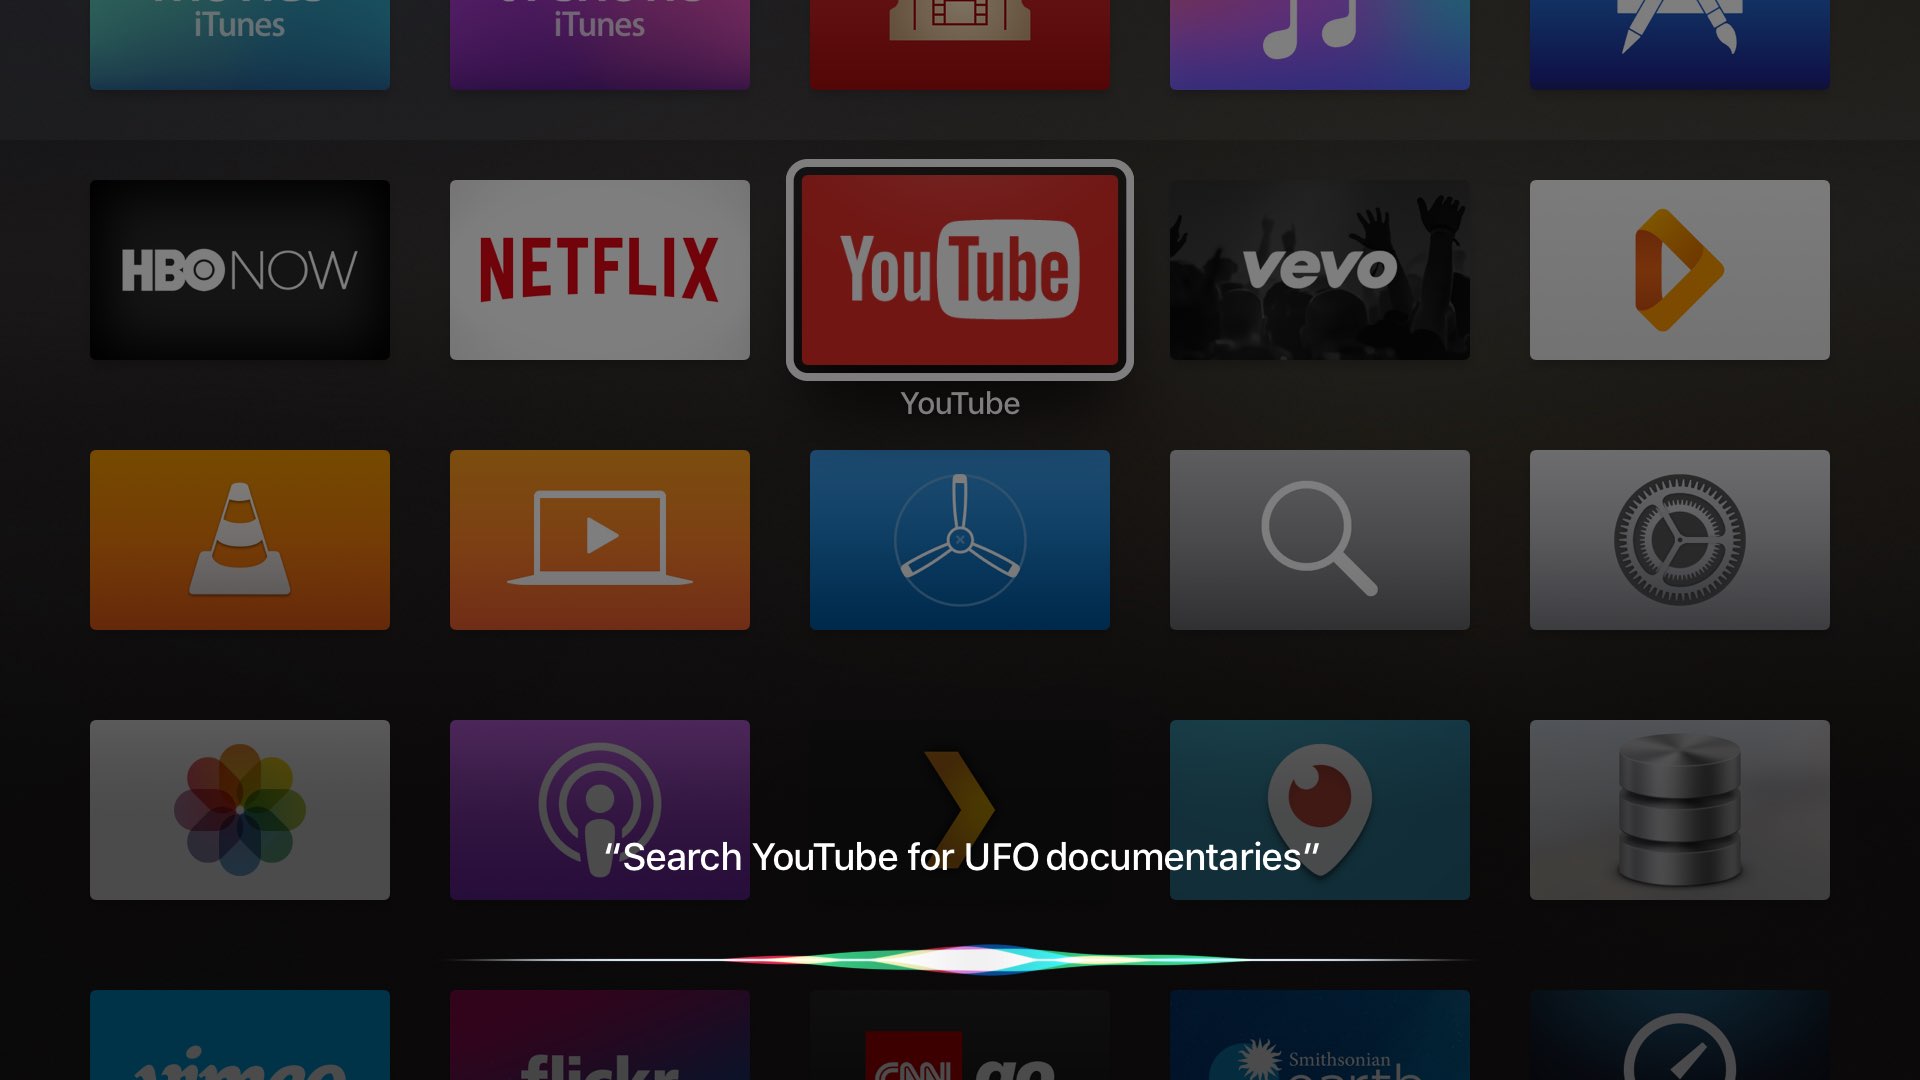 tvOS Siri YouTube search Apple TV screenshot 001